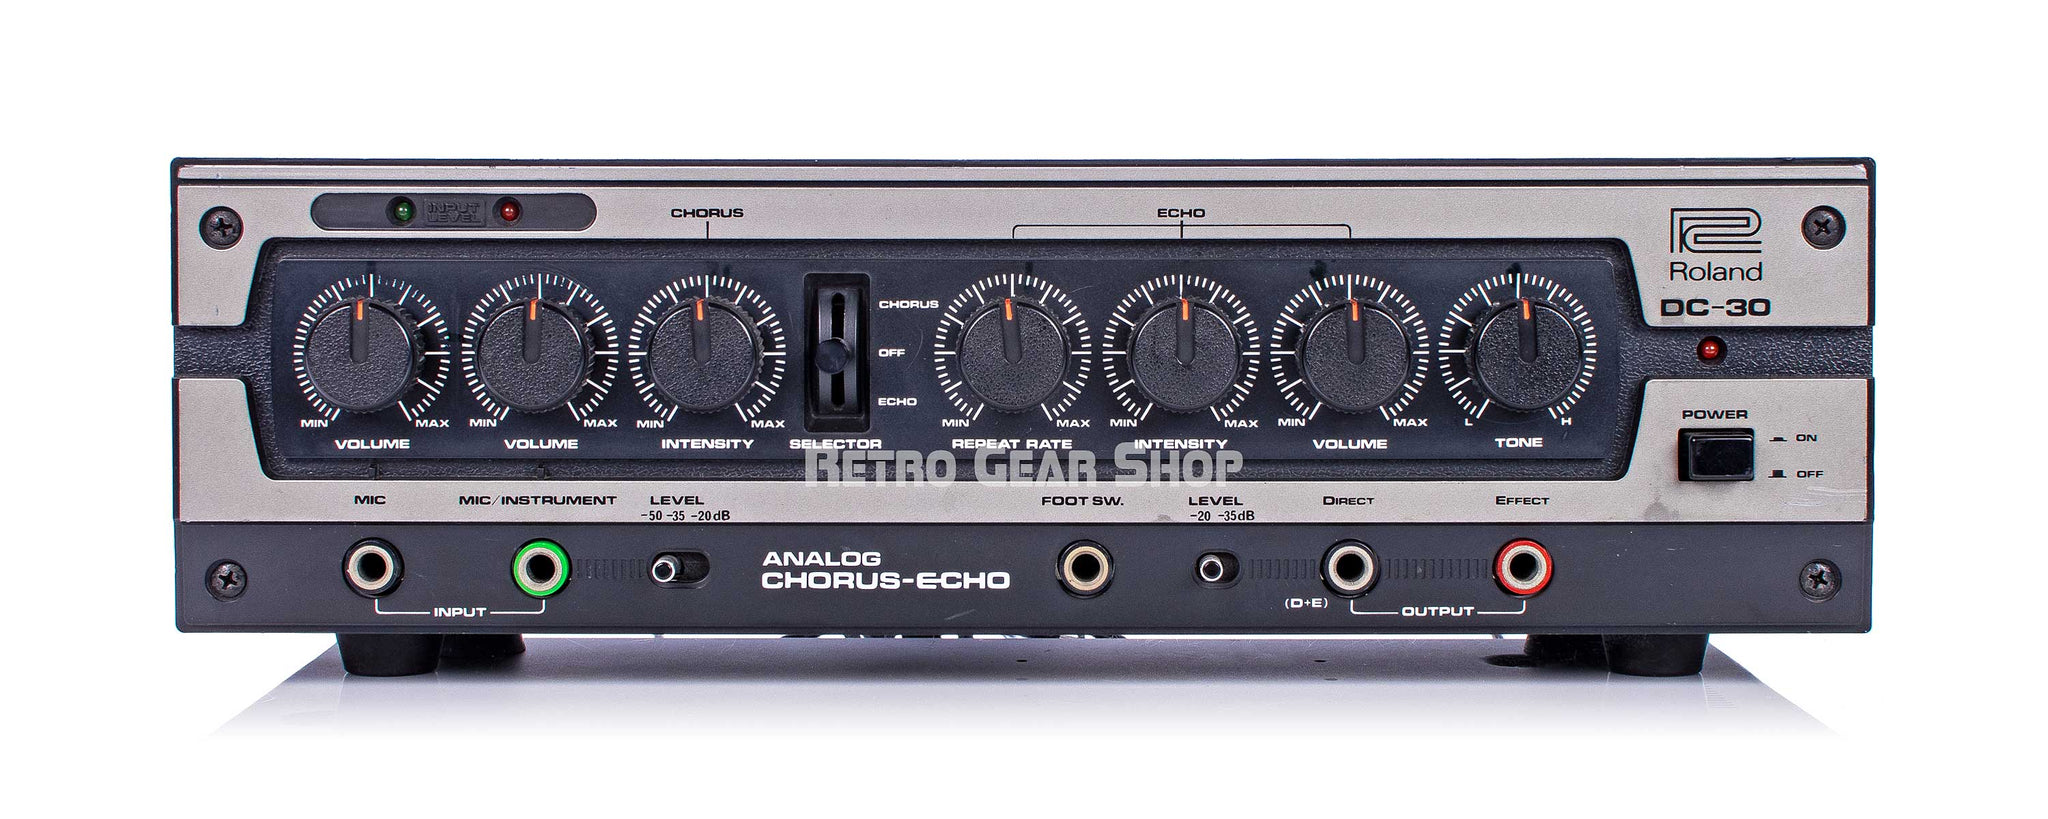 Roland DC-30 Analog Chorus Echo FV2 Volume Pedal Delay Effect 